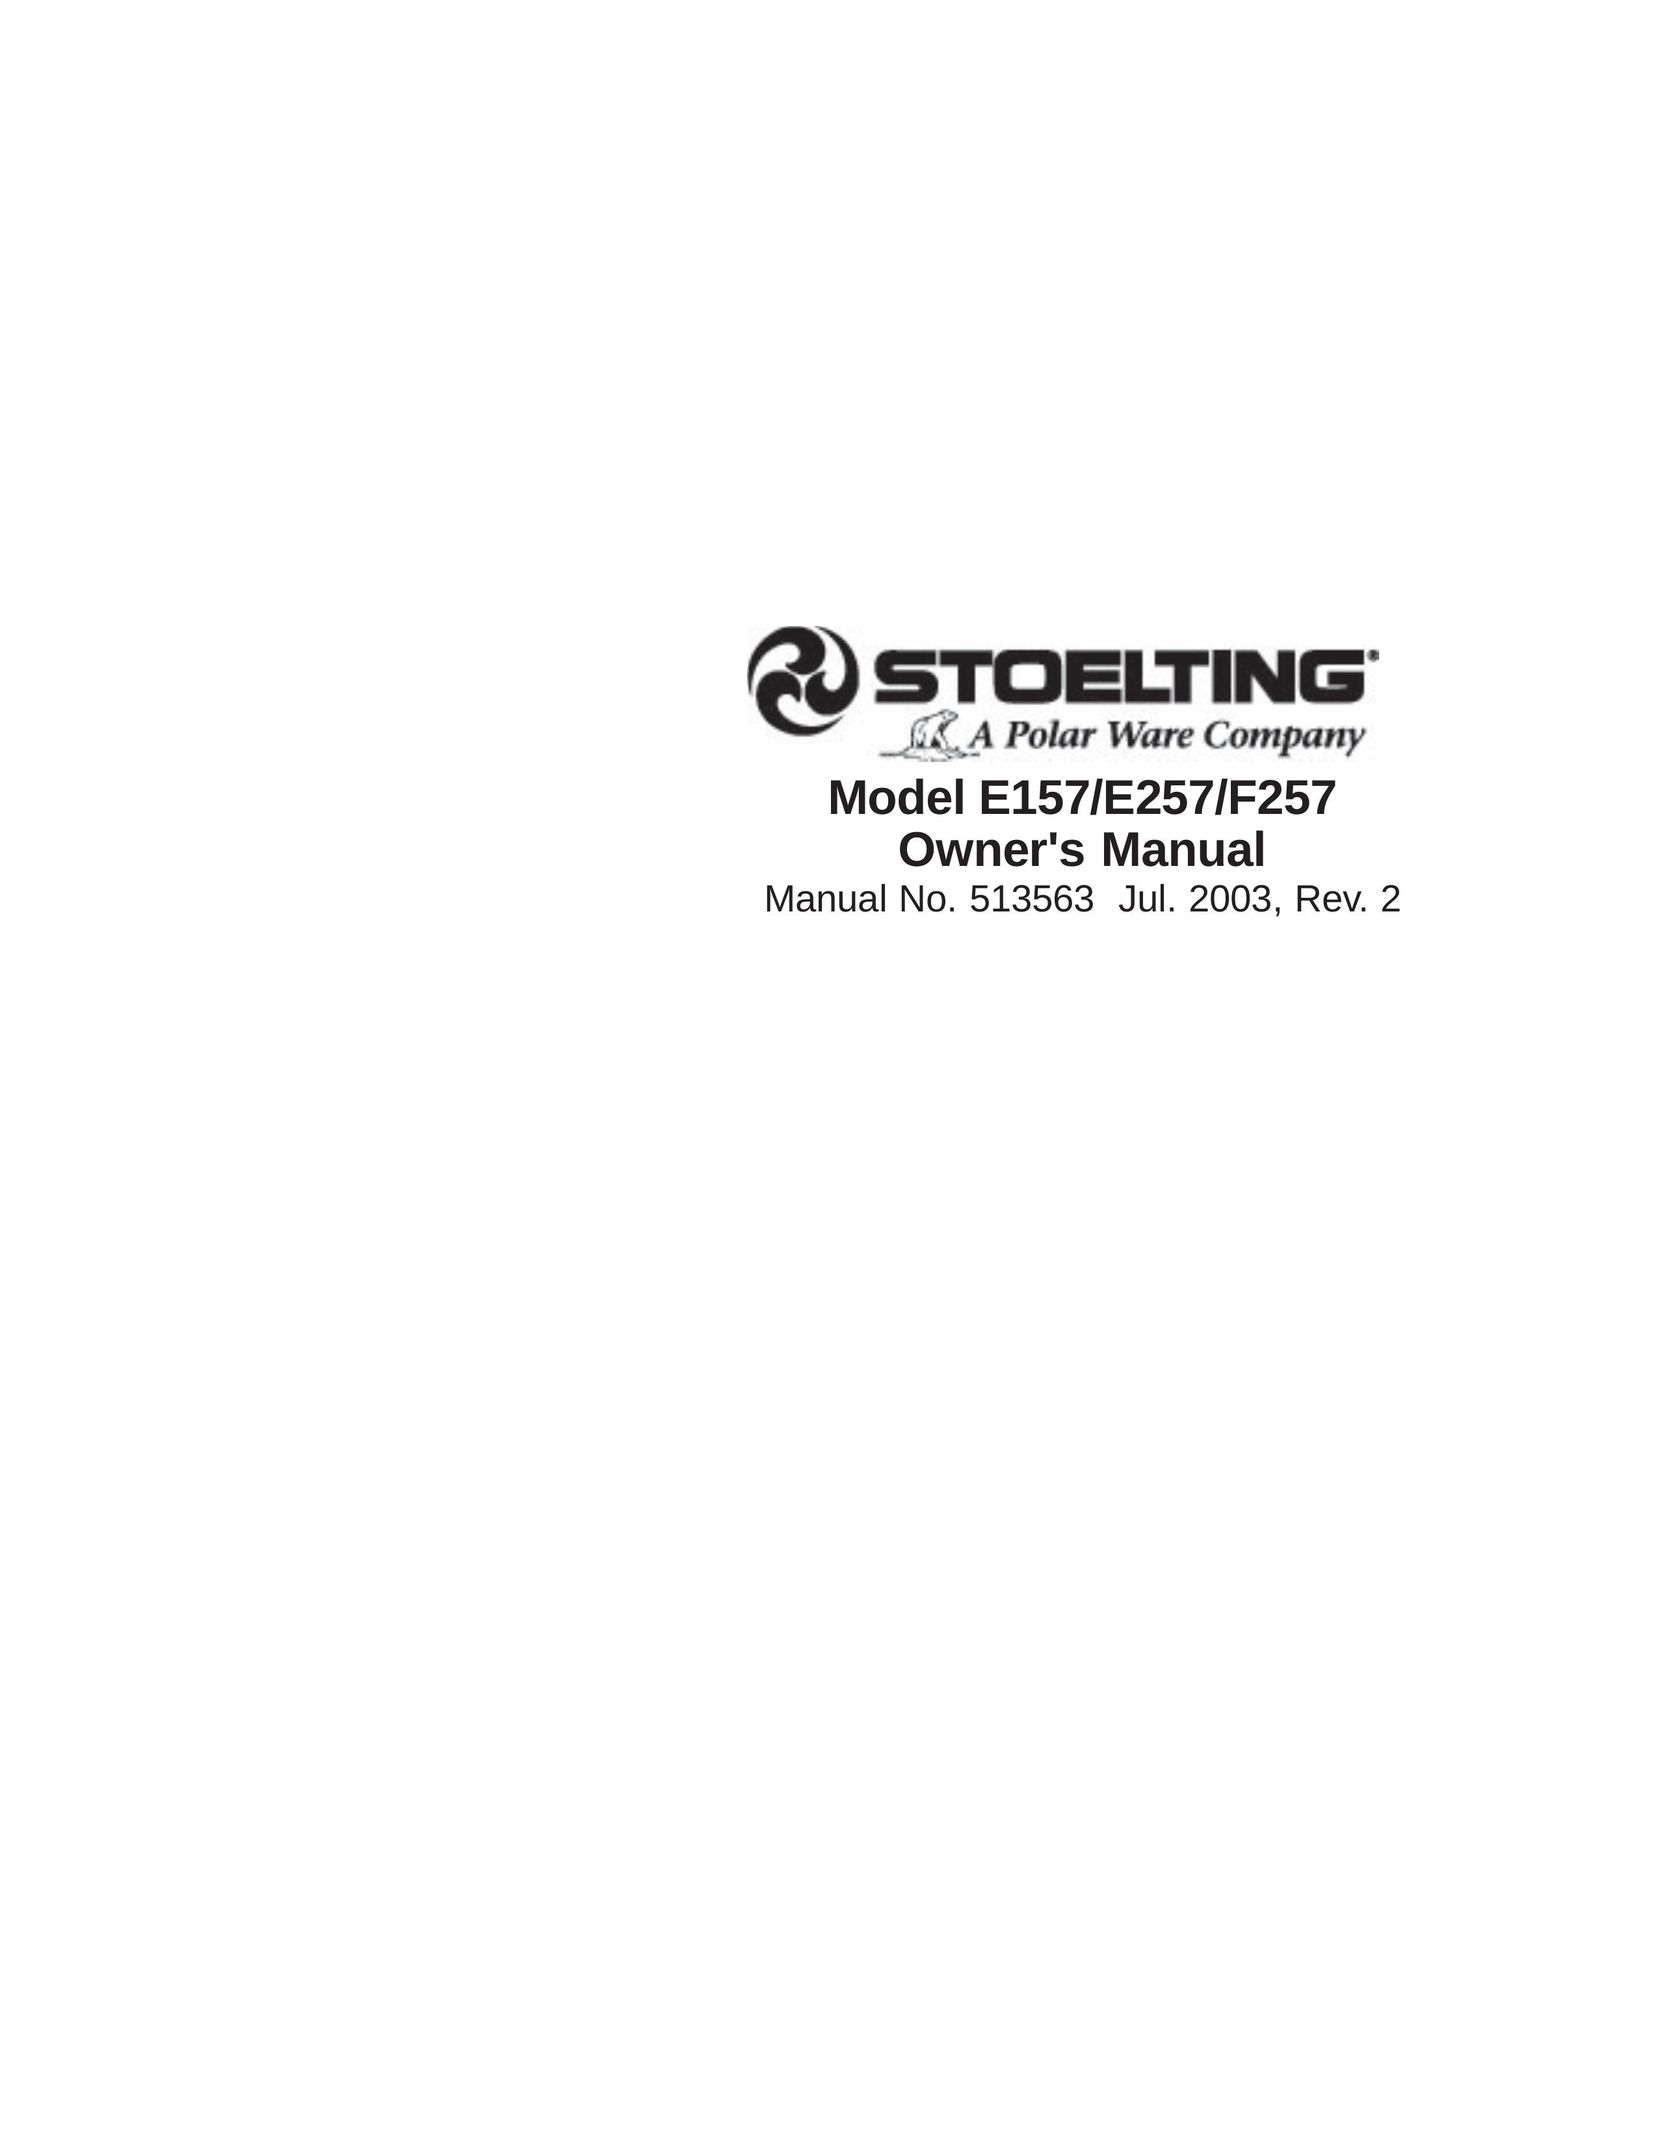 Stoelting F257 Freezer User Manual